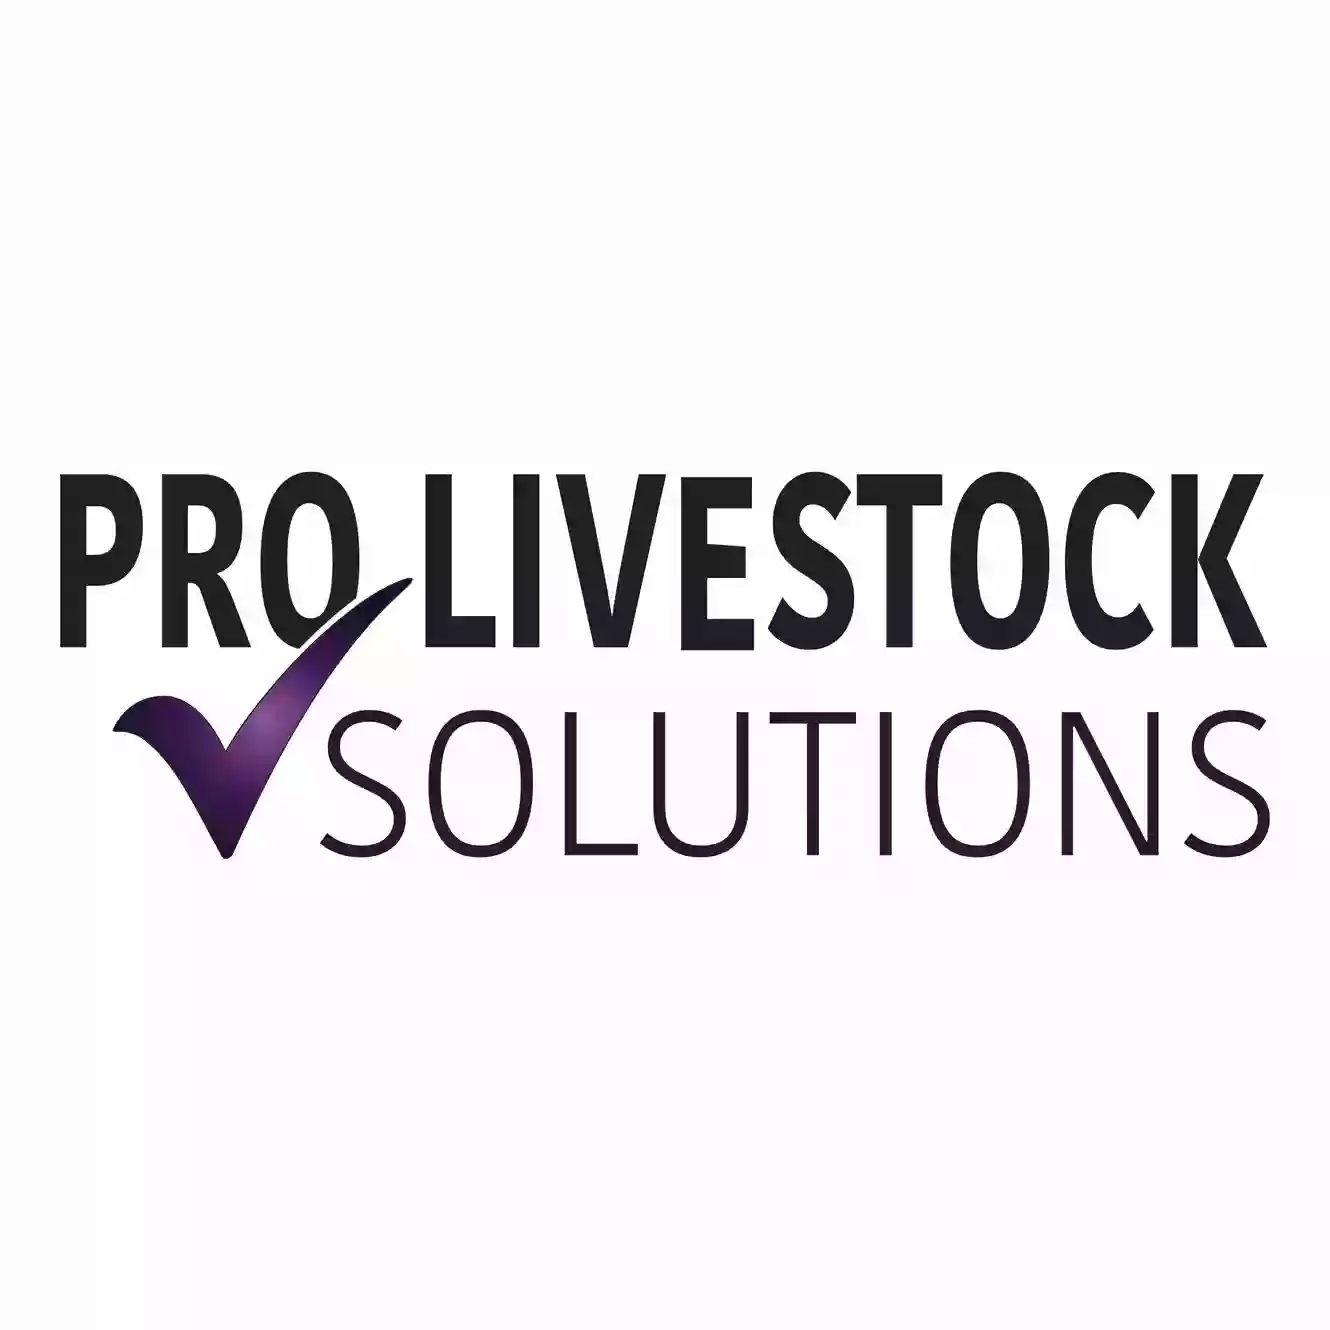 Pro Livestock Solutions